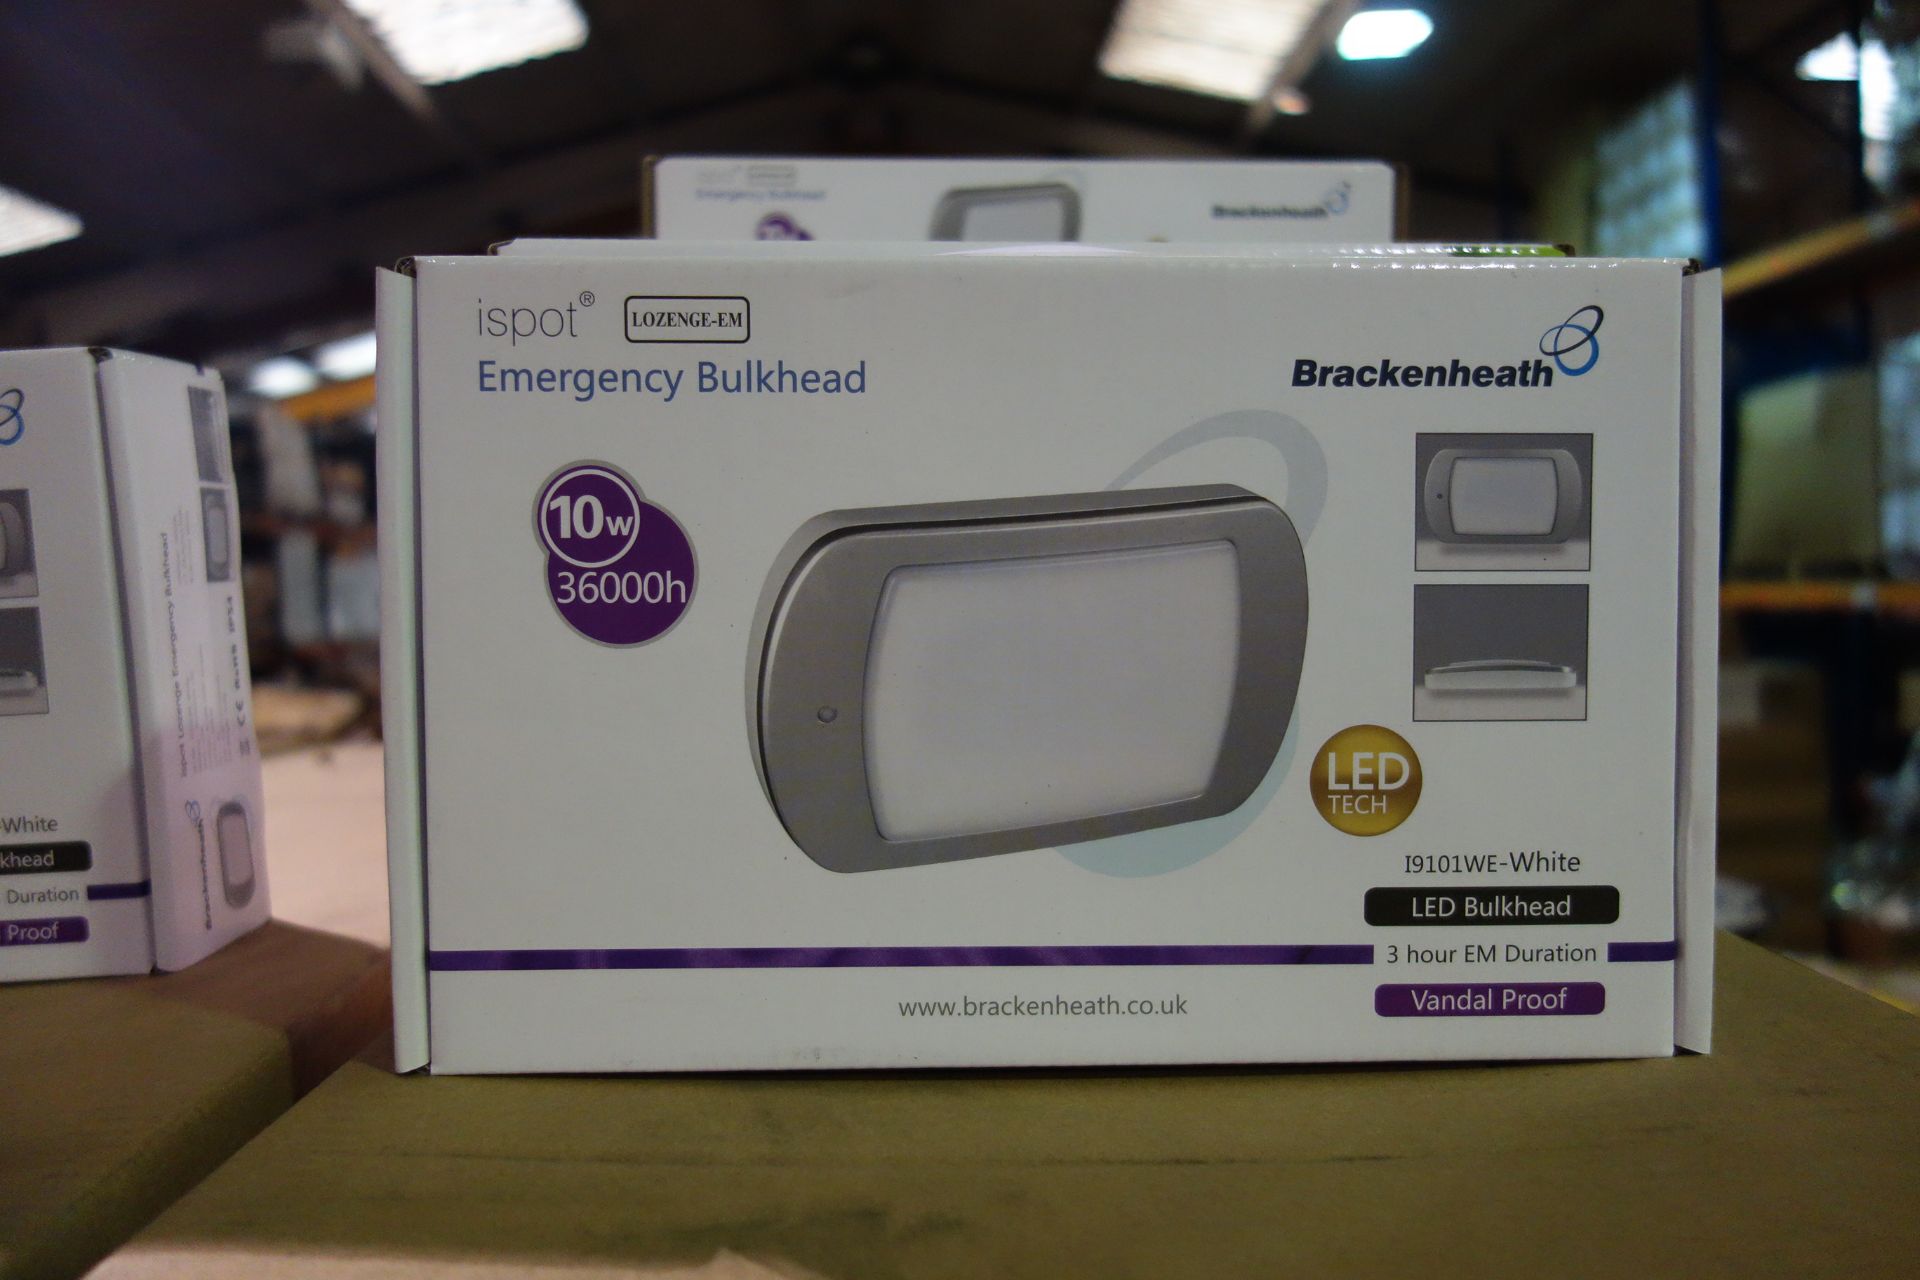 10 X Brakenheath I9101WE-White LOZENGE EM LED-Emergency Bulkhead 10W 3600H 3HR EM Duration Vandal